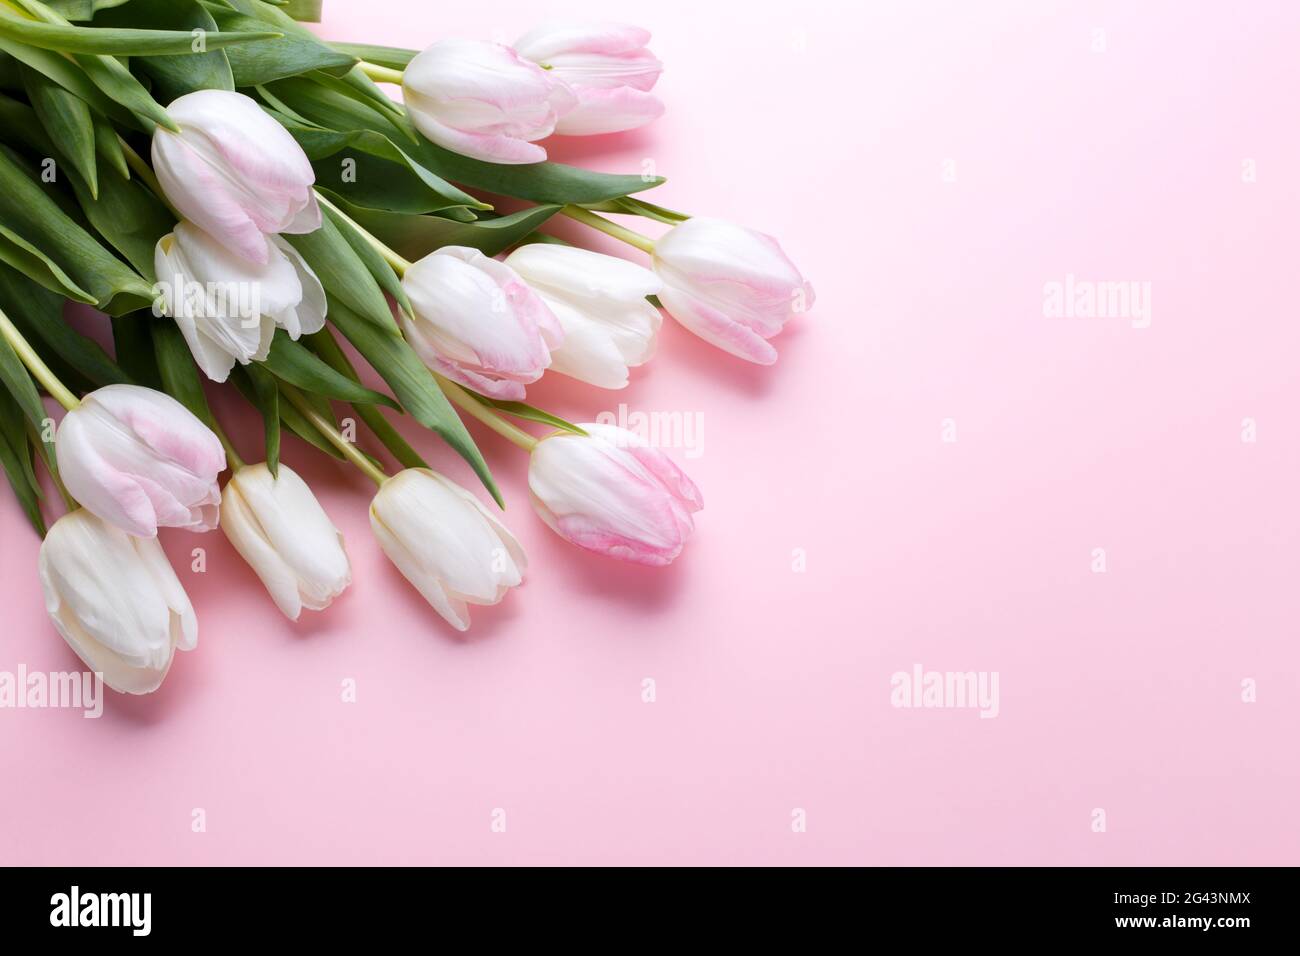 Tulips on pink background Stock Photo